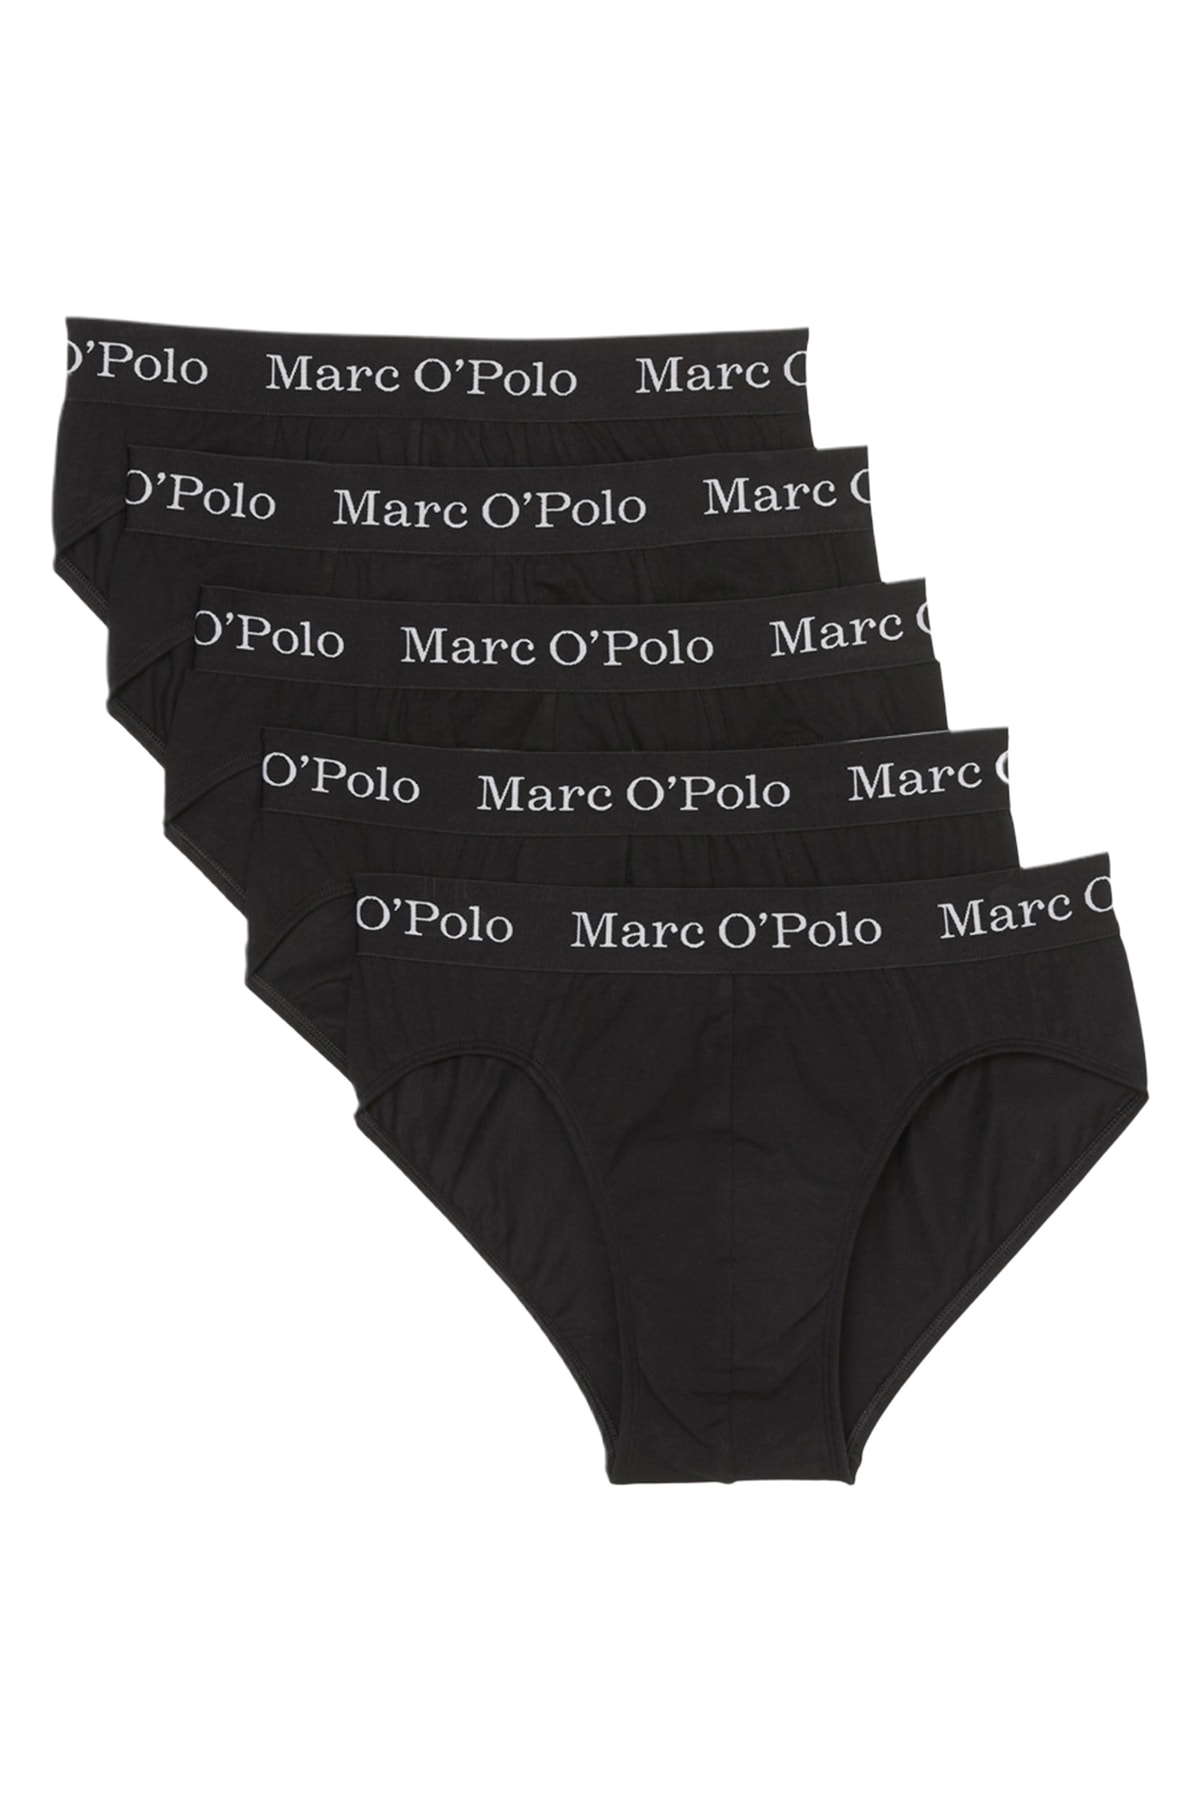 Marc O'Polo Body & Beach Boxershorts Schwarz 3er-Pack Fast ausverkauft